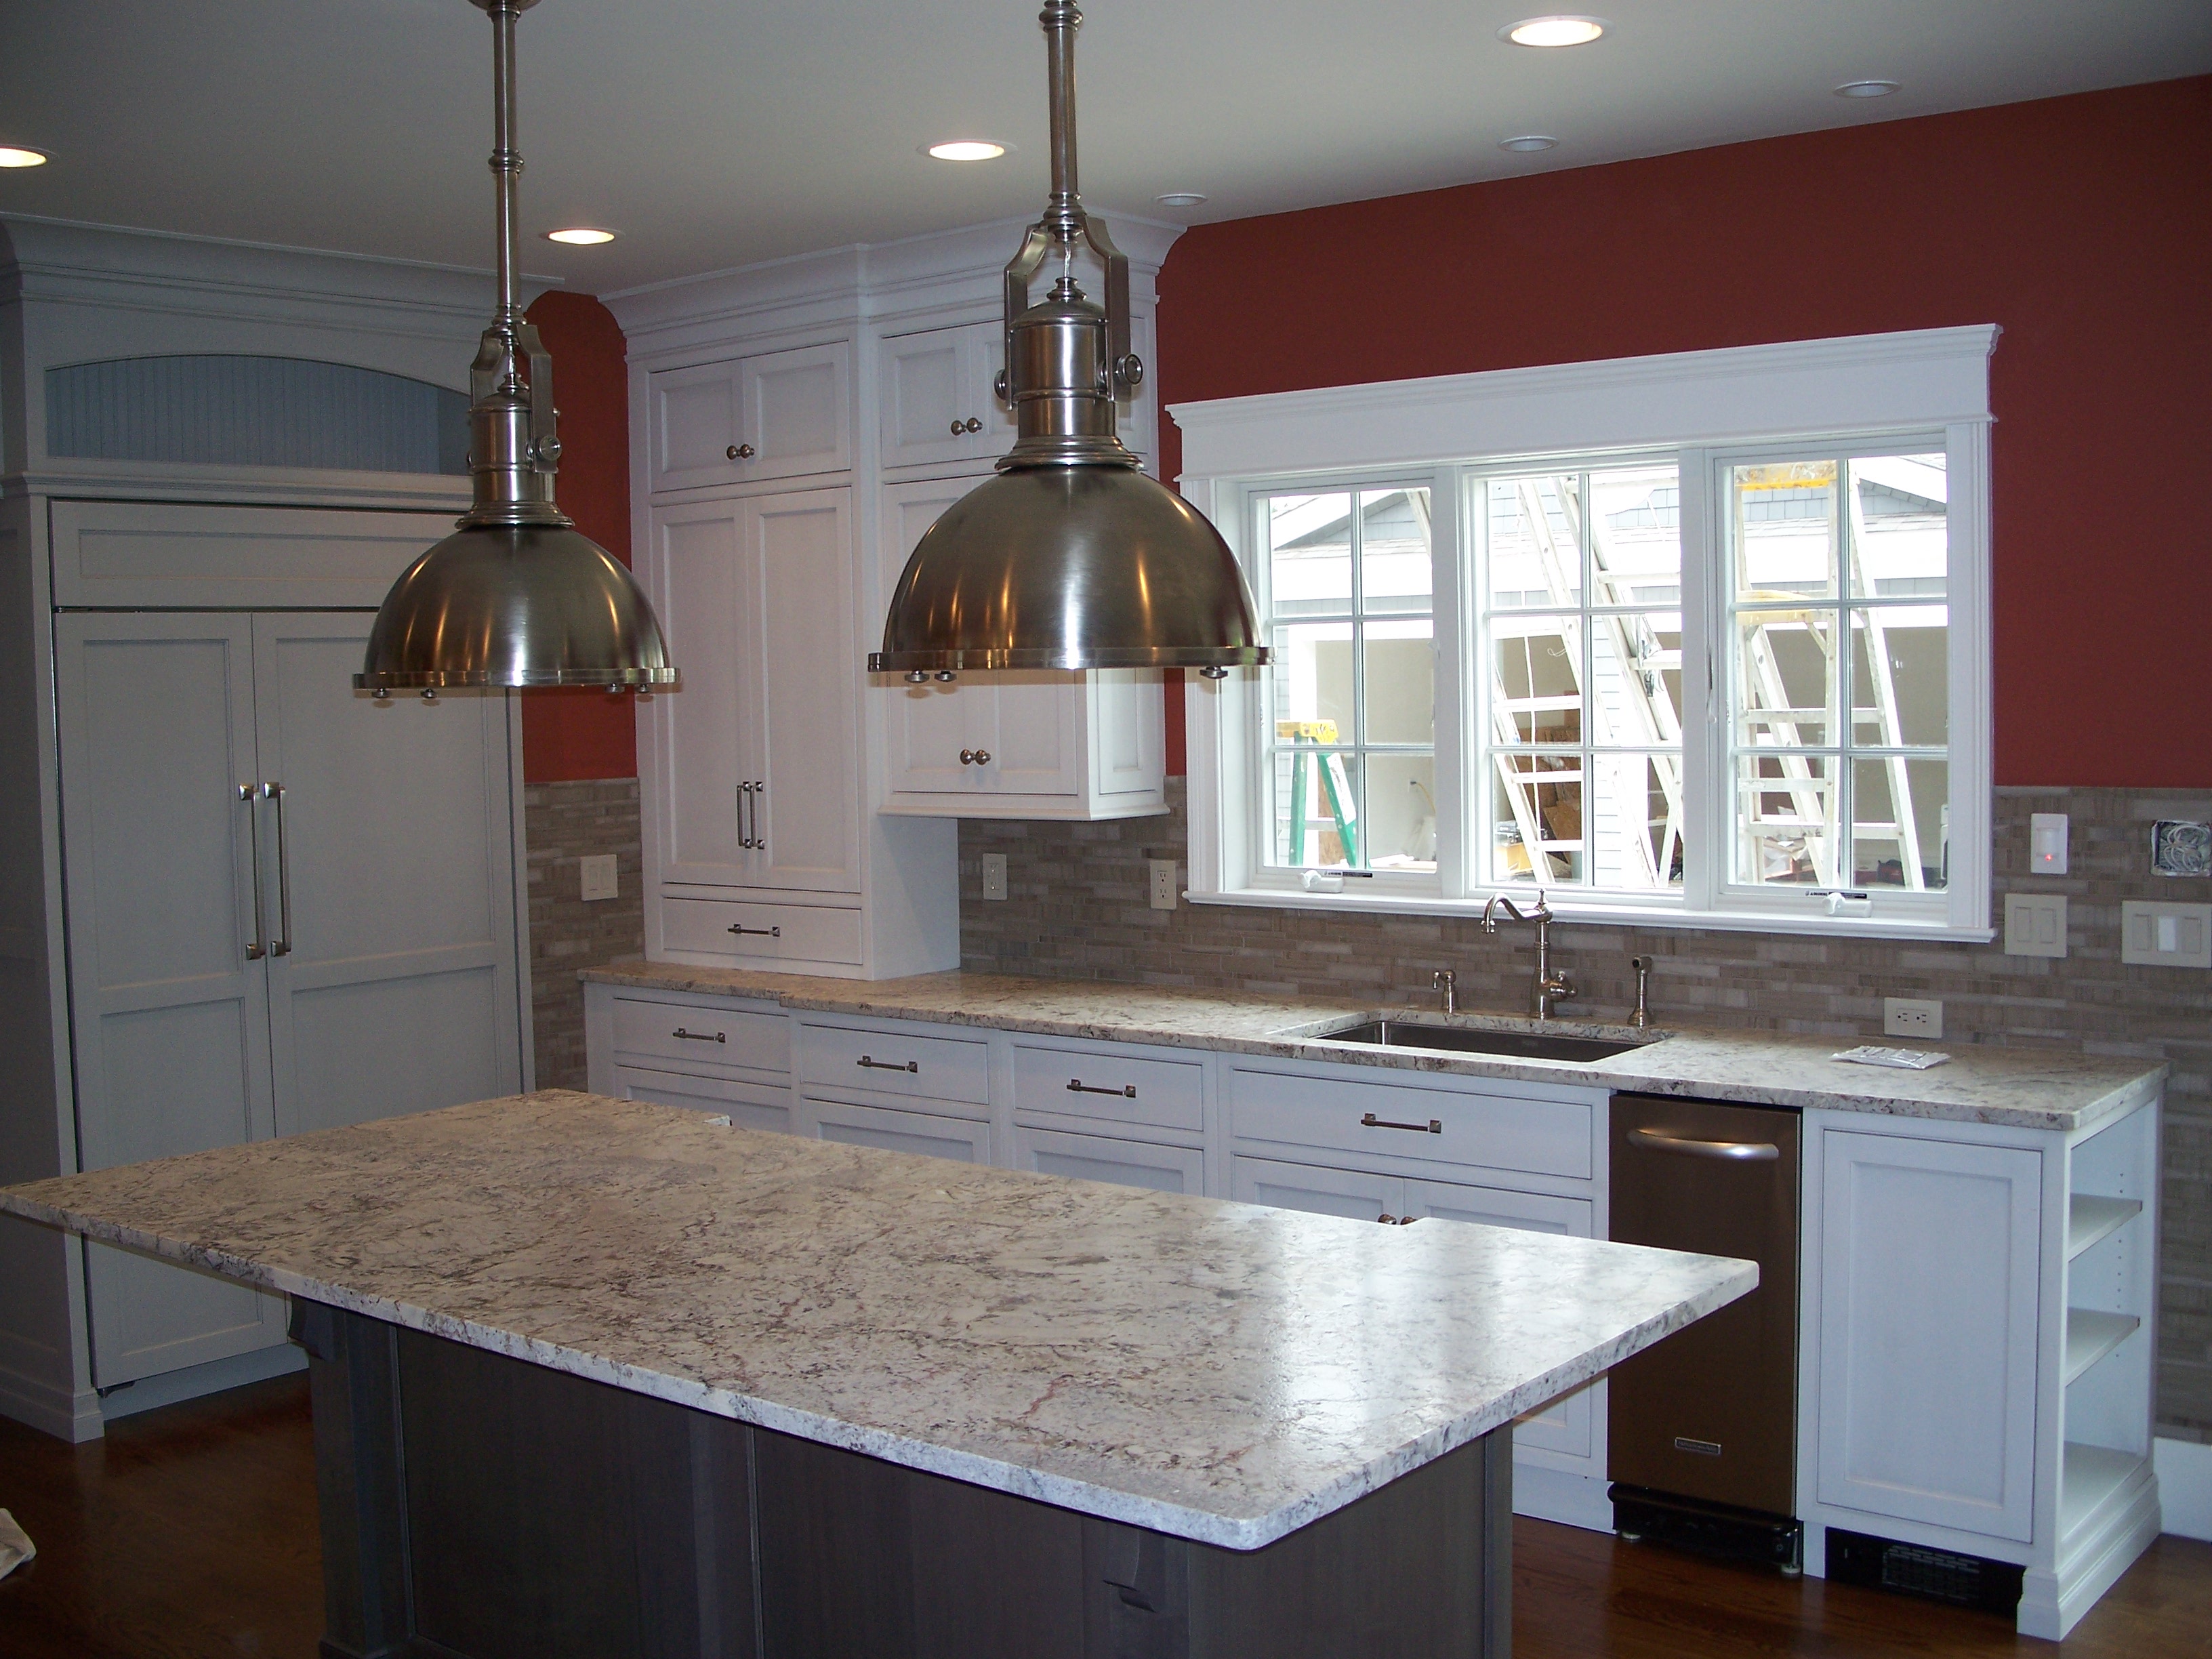 White Spring Leathered Finish Granite Kitchen Countertops New